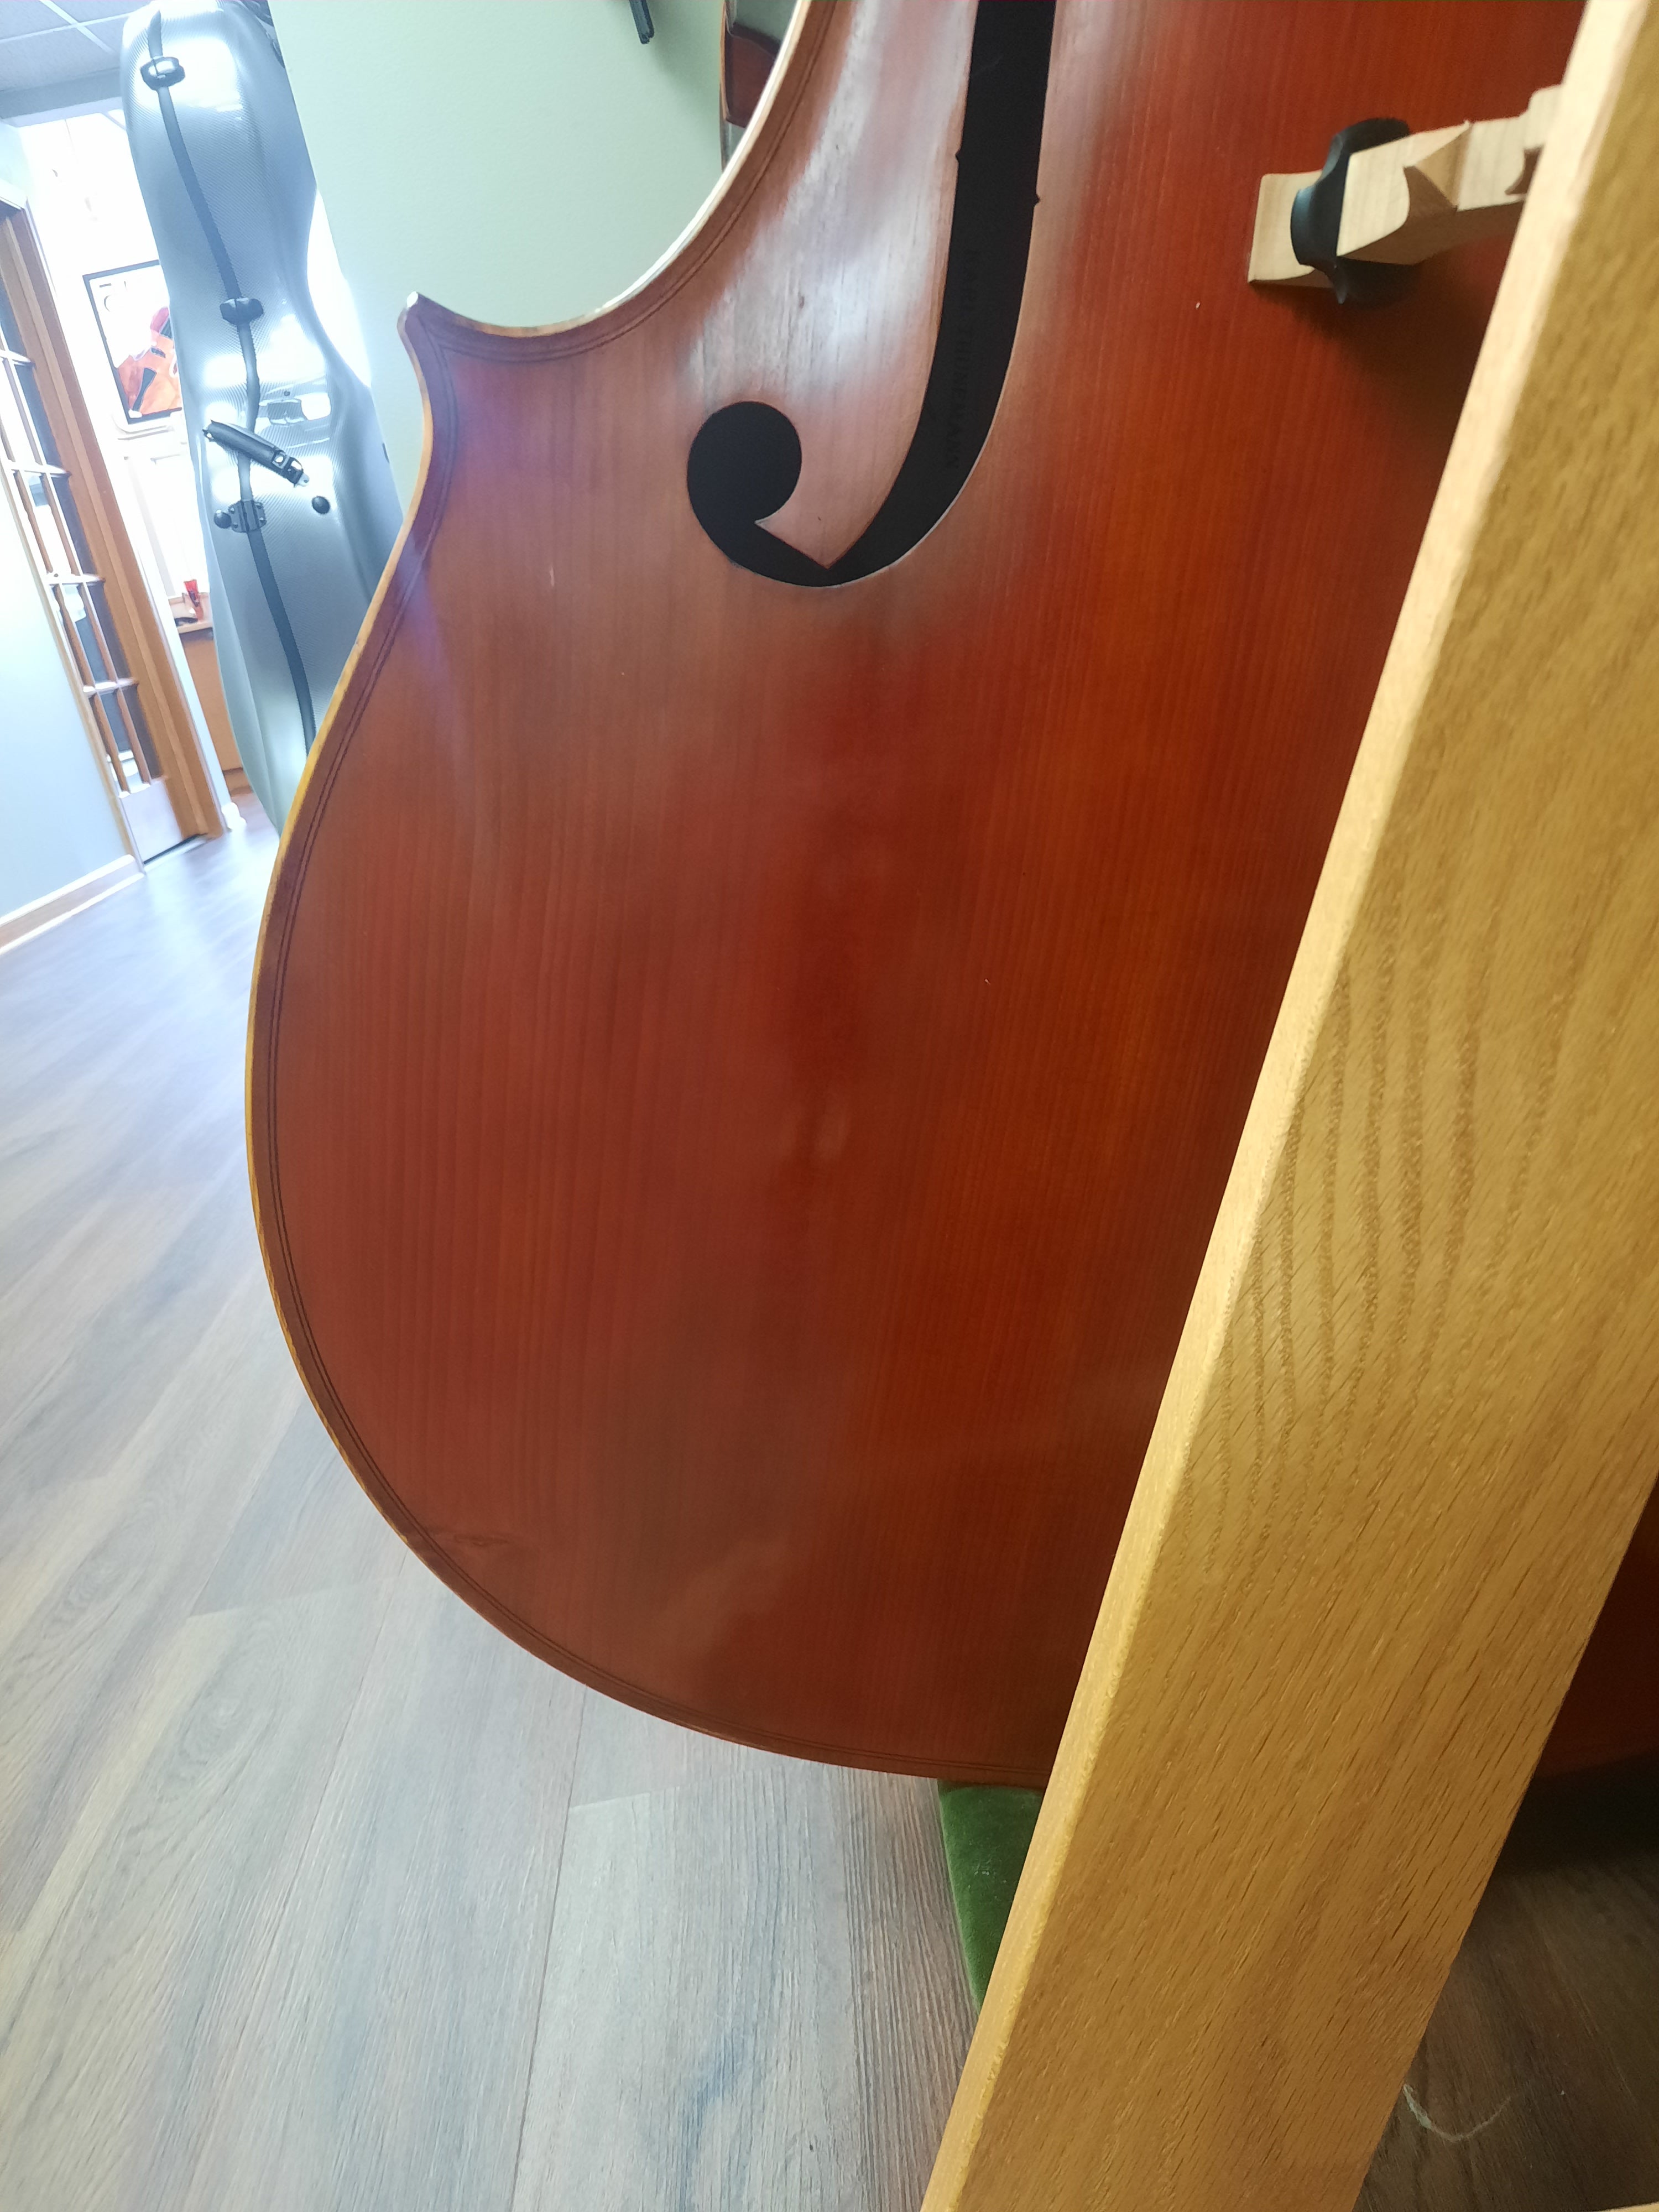 Ceruti Model 3/4 Bass